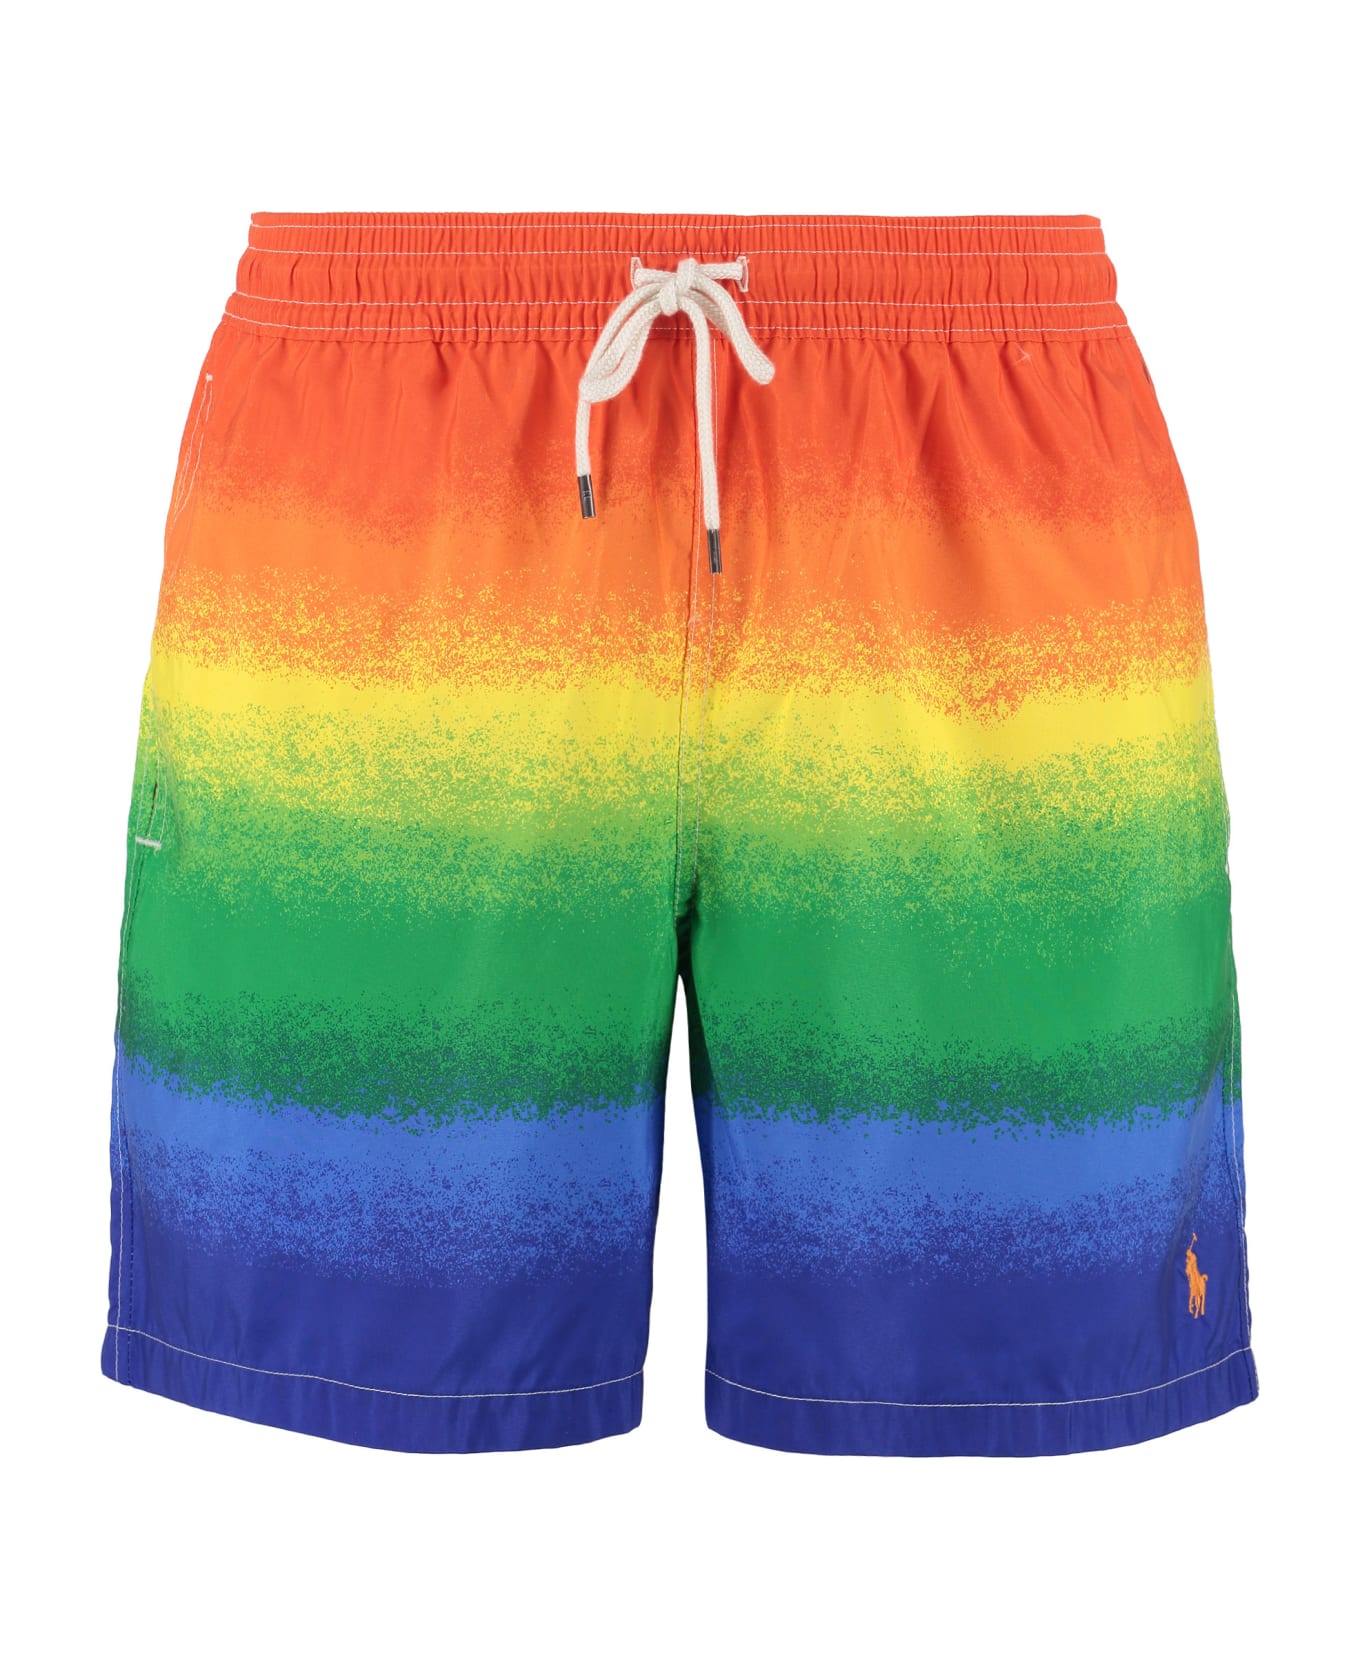 Polo Ralph Lauren Printed Swim Shorts - Multicolor